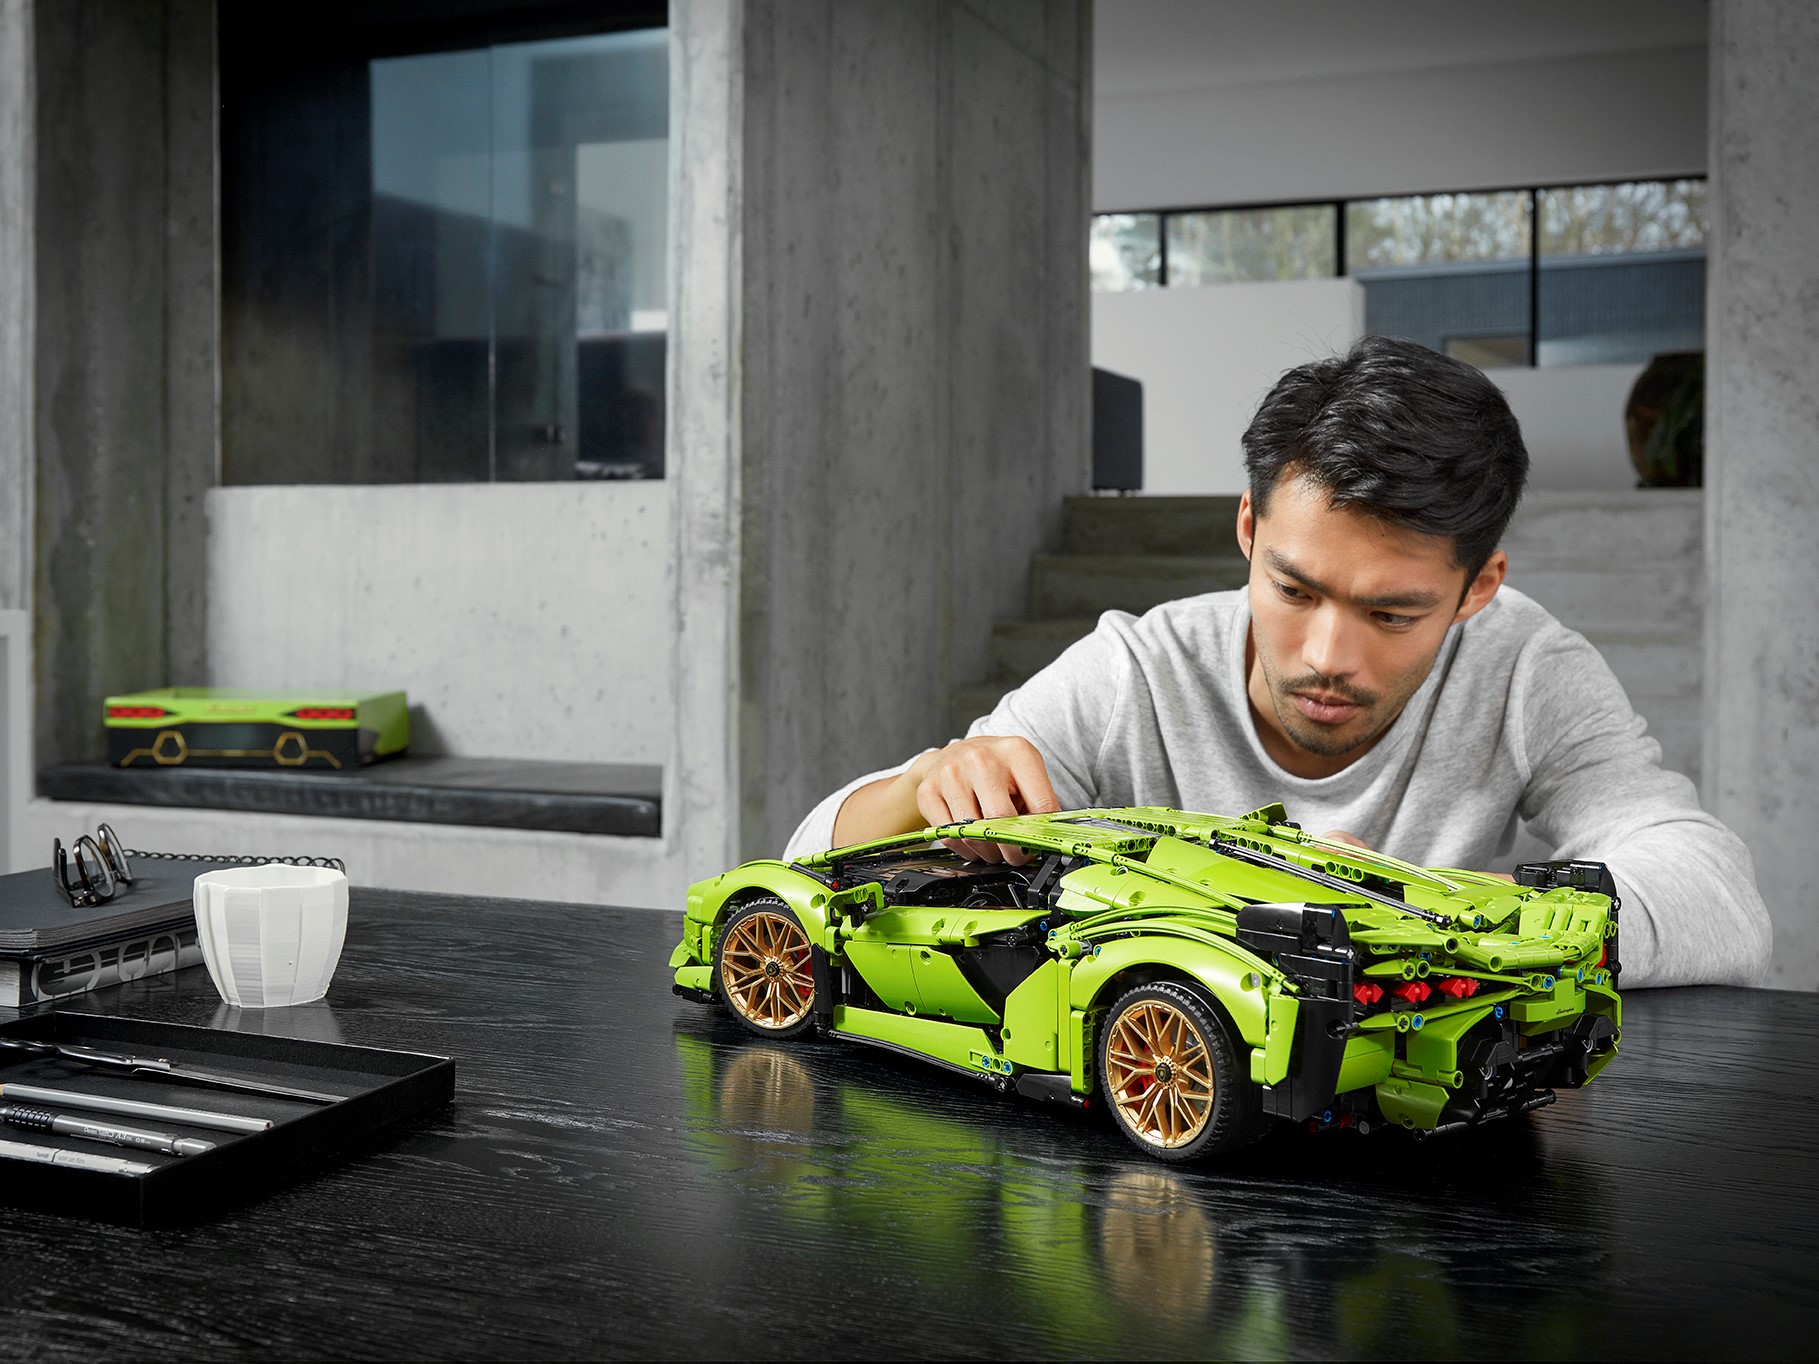 LEGO MOC RC mod Lego Technic Lamborghini Sian FKP 37 42115 without taking  the car apart by SJ_LegoFan